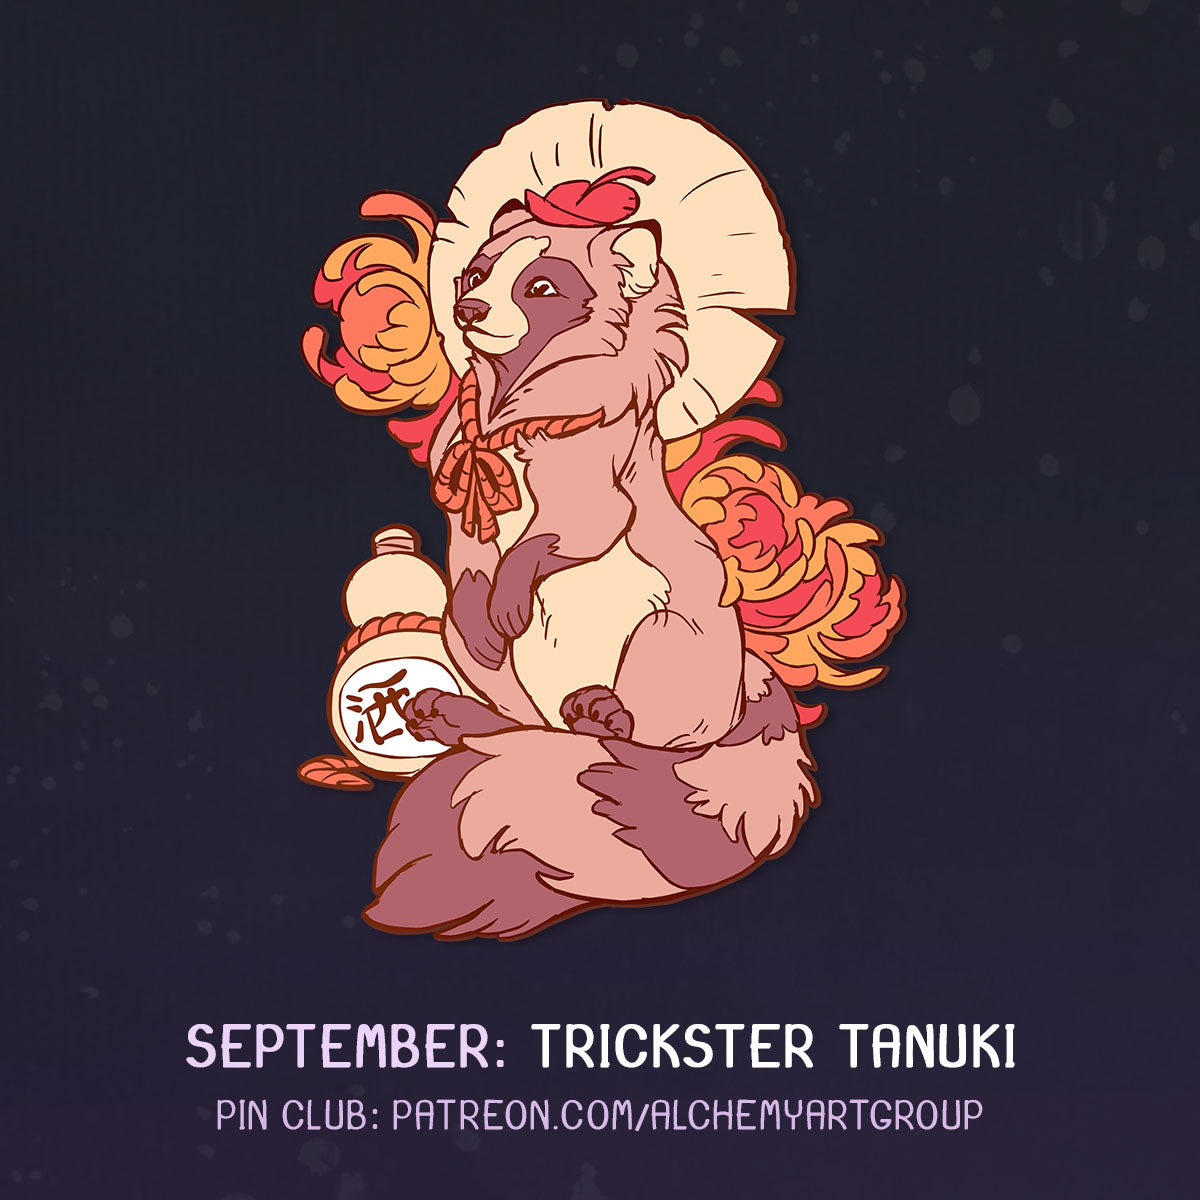 [Mythology] Trickster Tanuki Pin